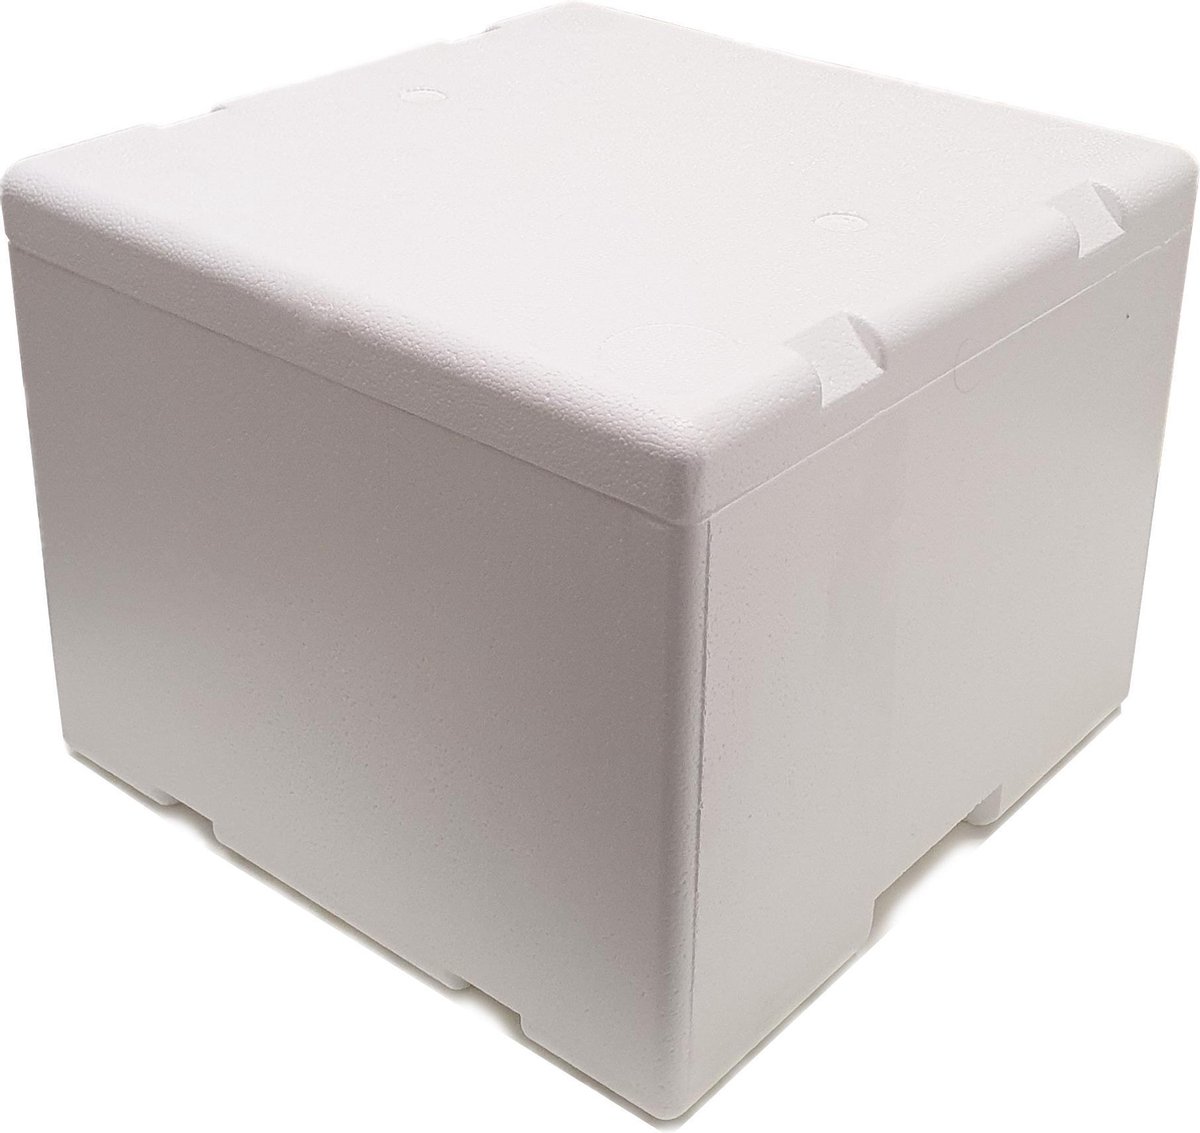 Thermobox 21 Liter - Isolatie Doos - Droogijs Box - Tempex doos - EPS -  Koelbox | bol